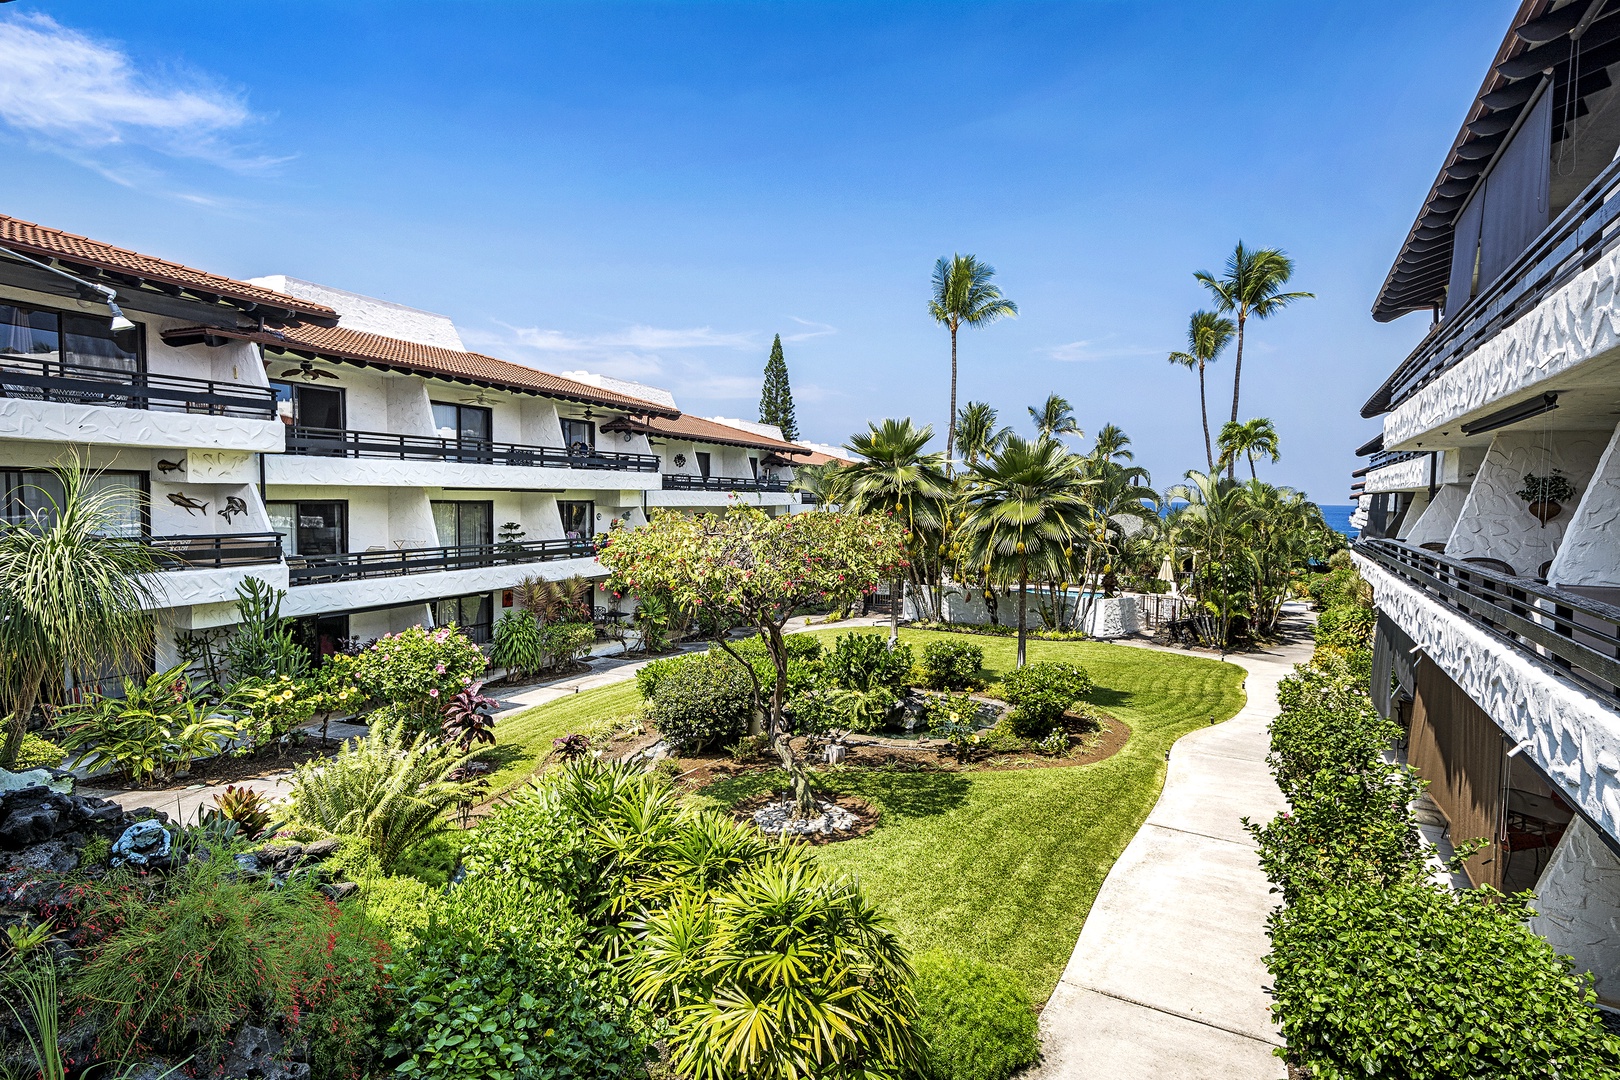 Kailua Kona Vacation Rentals, Casa De Emdeko 222 - Picturesque grounds!